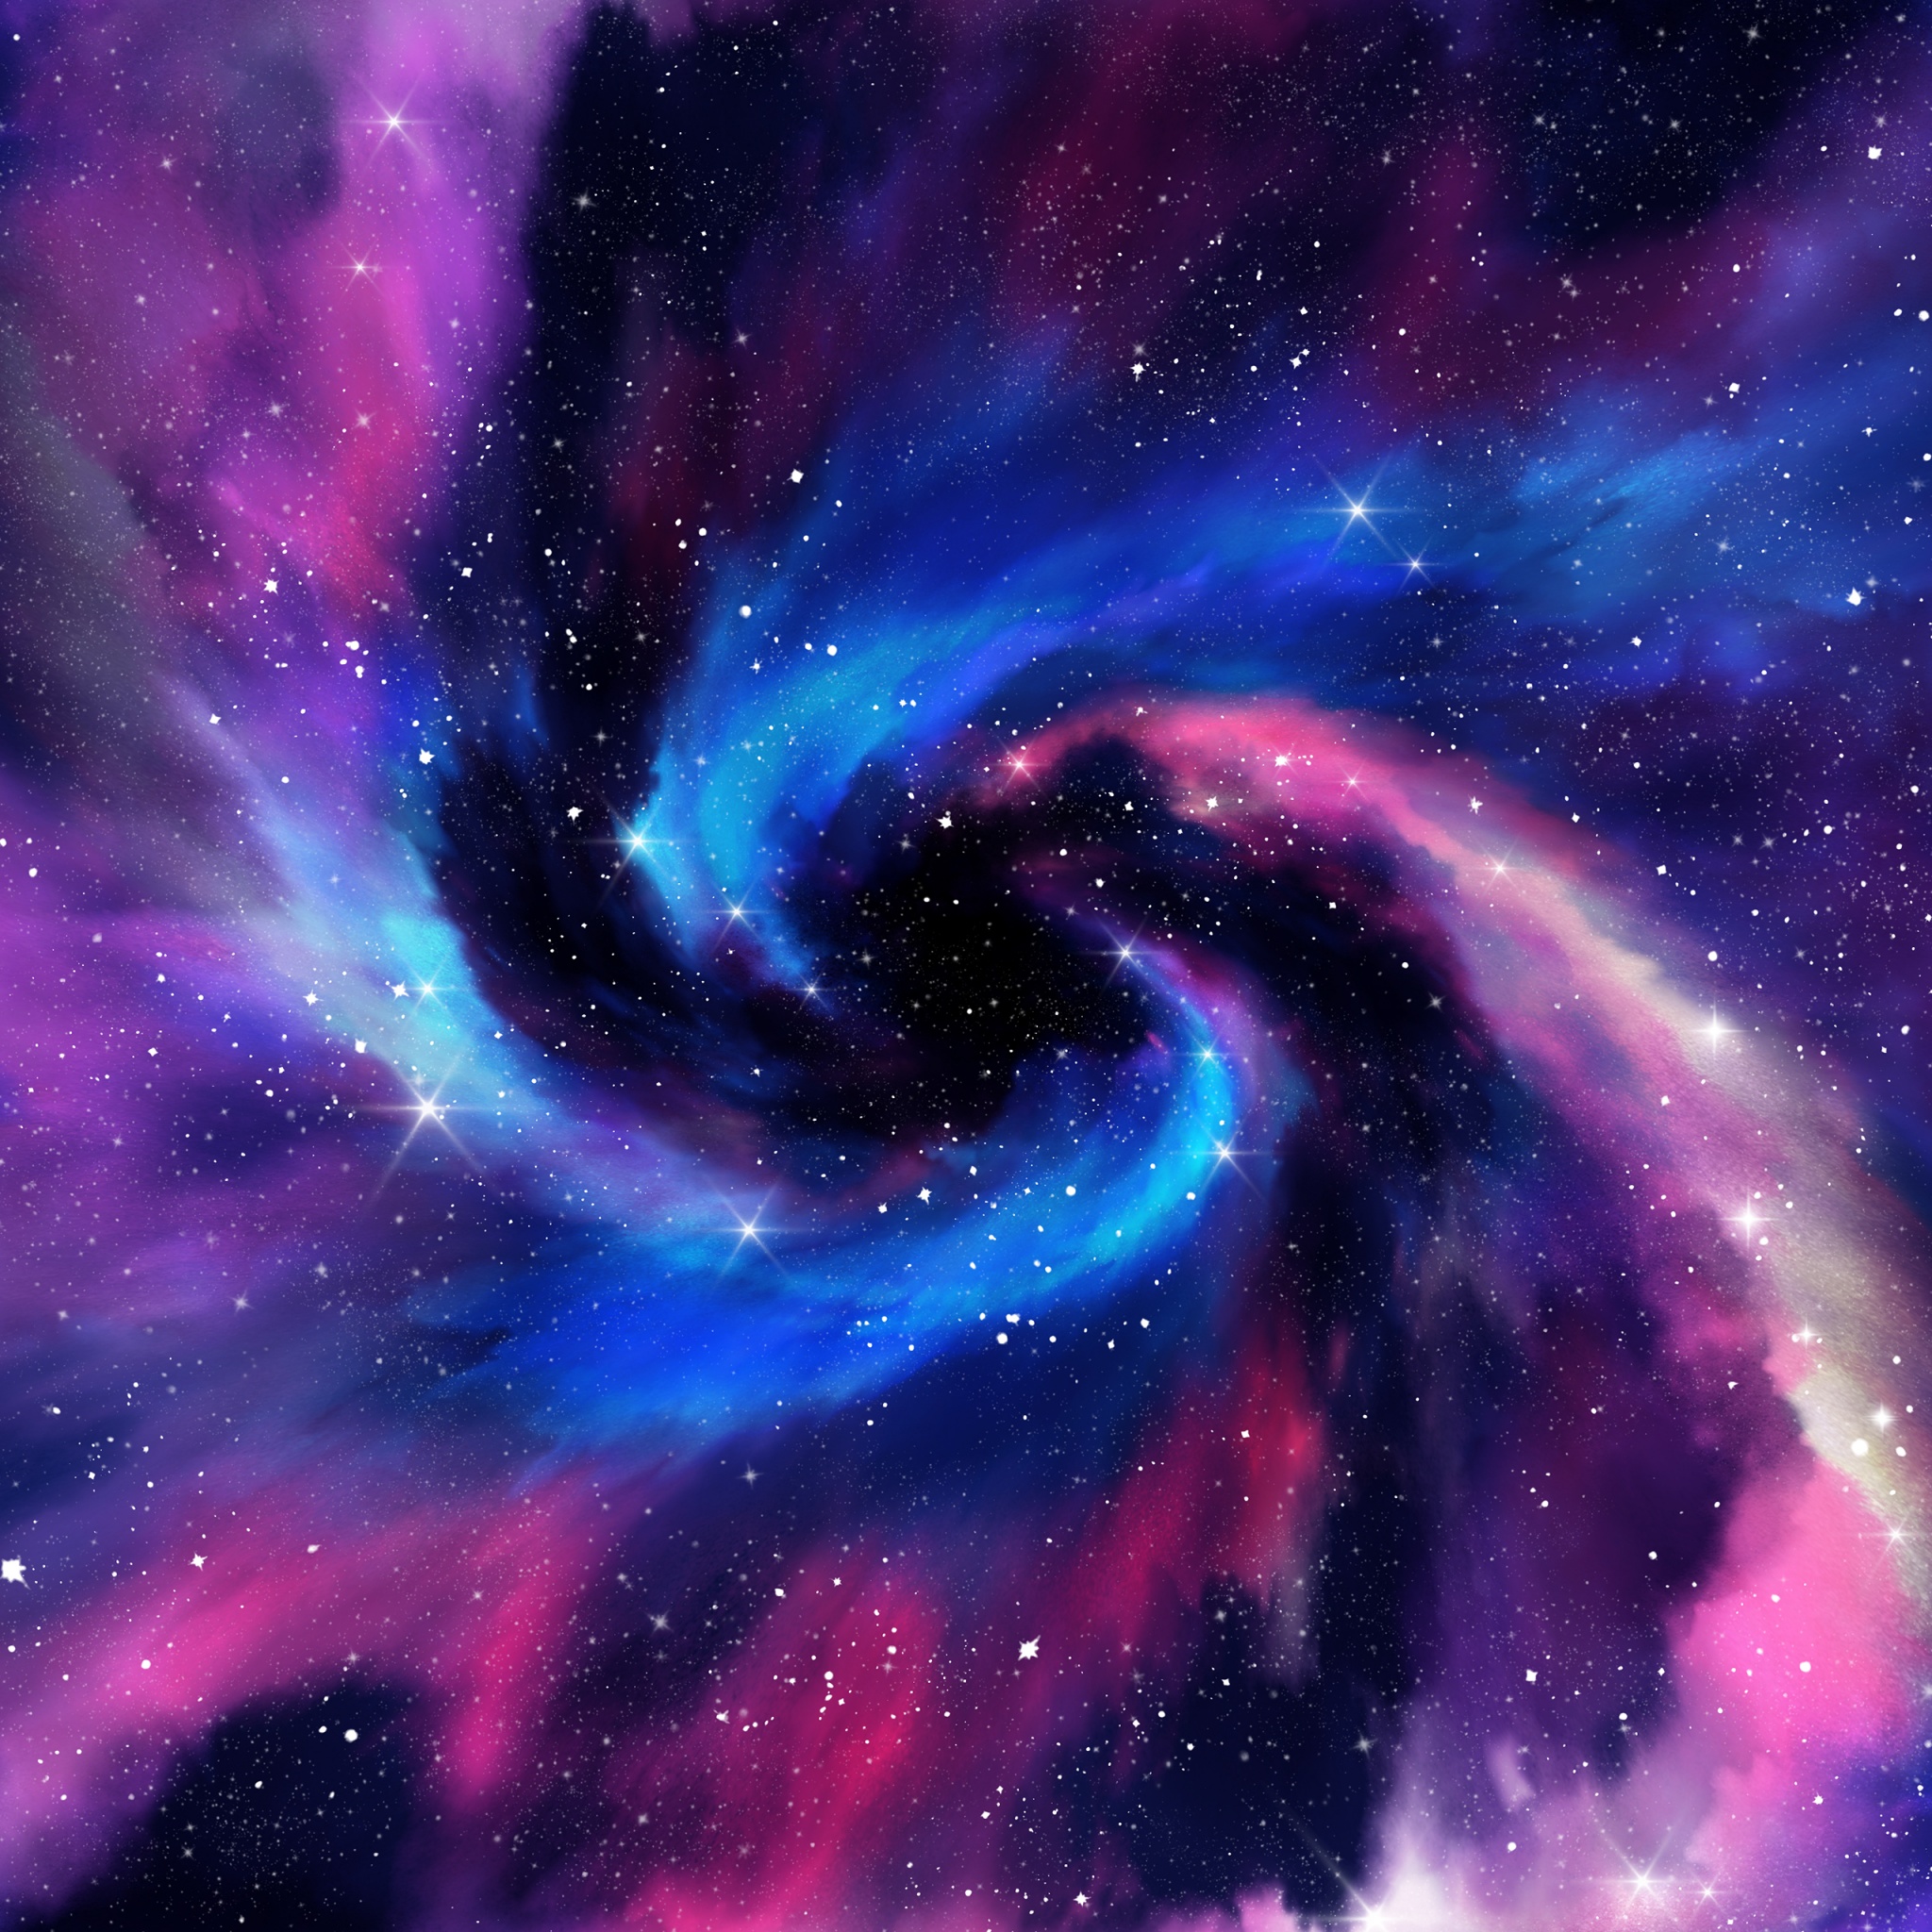 Galaxy | Galaxies wallpaper, Purple galaxy wallpaper, Pretty wallpapers  backgrounds